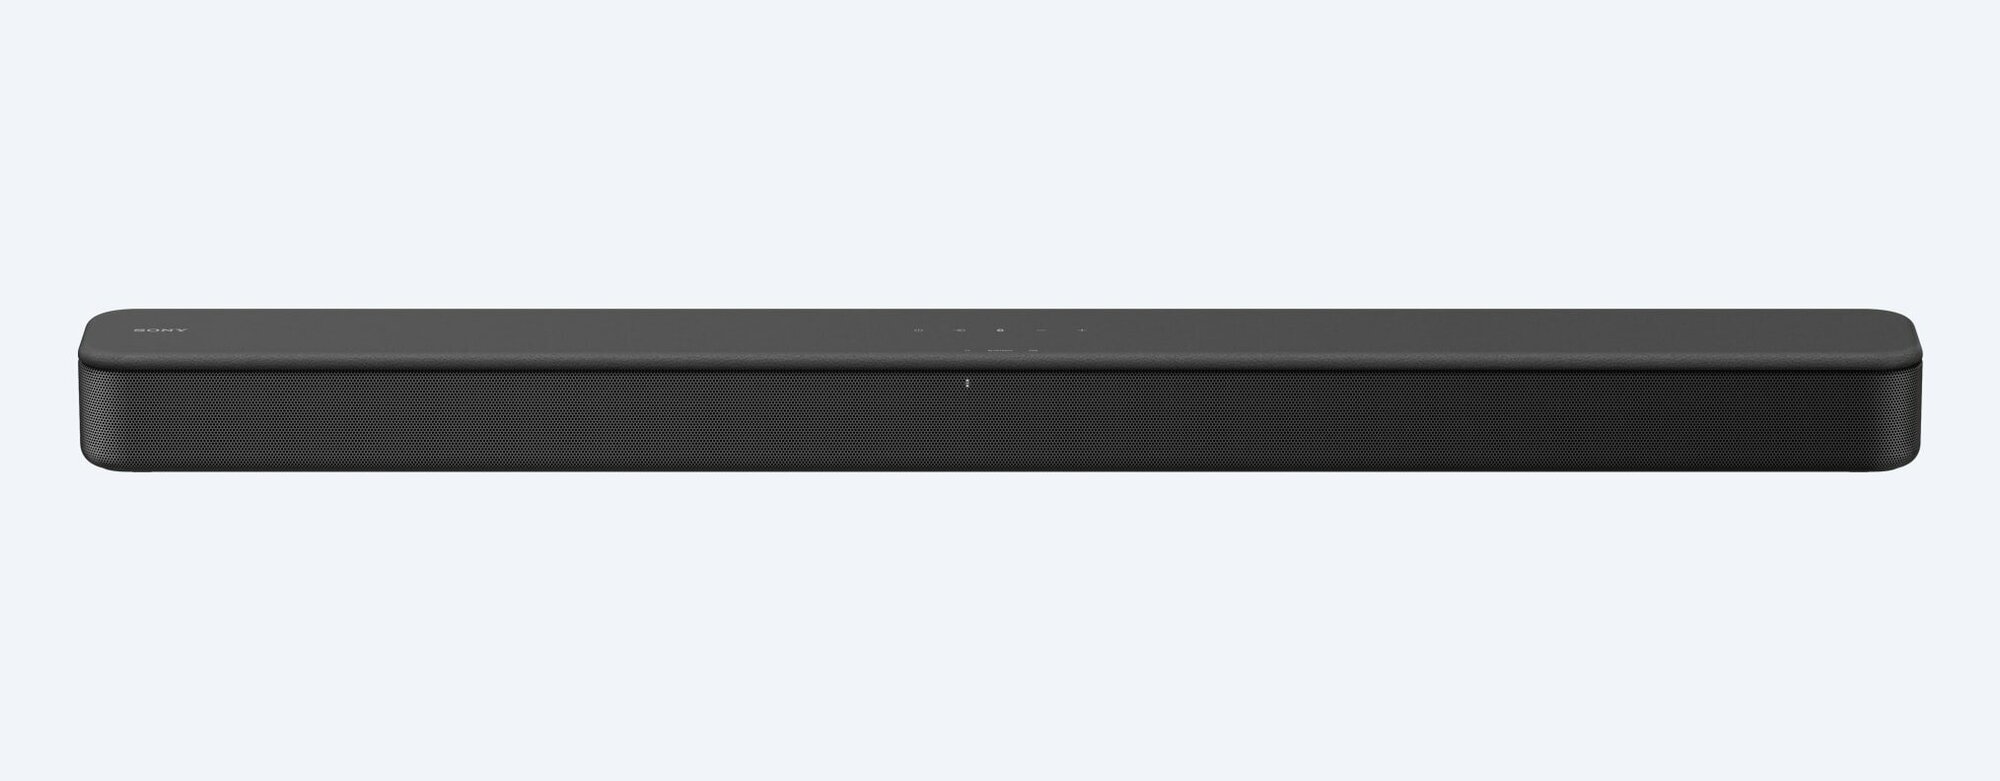 Sony HT-S100 black 2-канальный саундбар